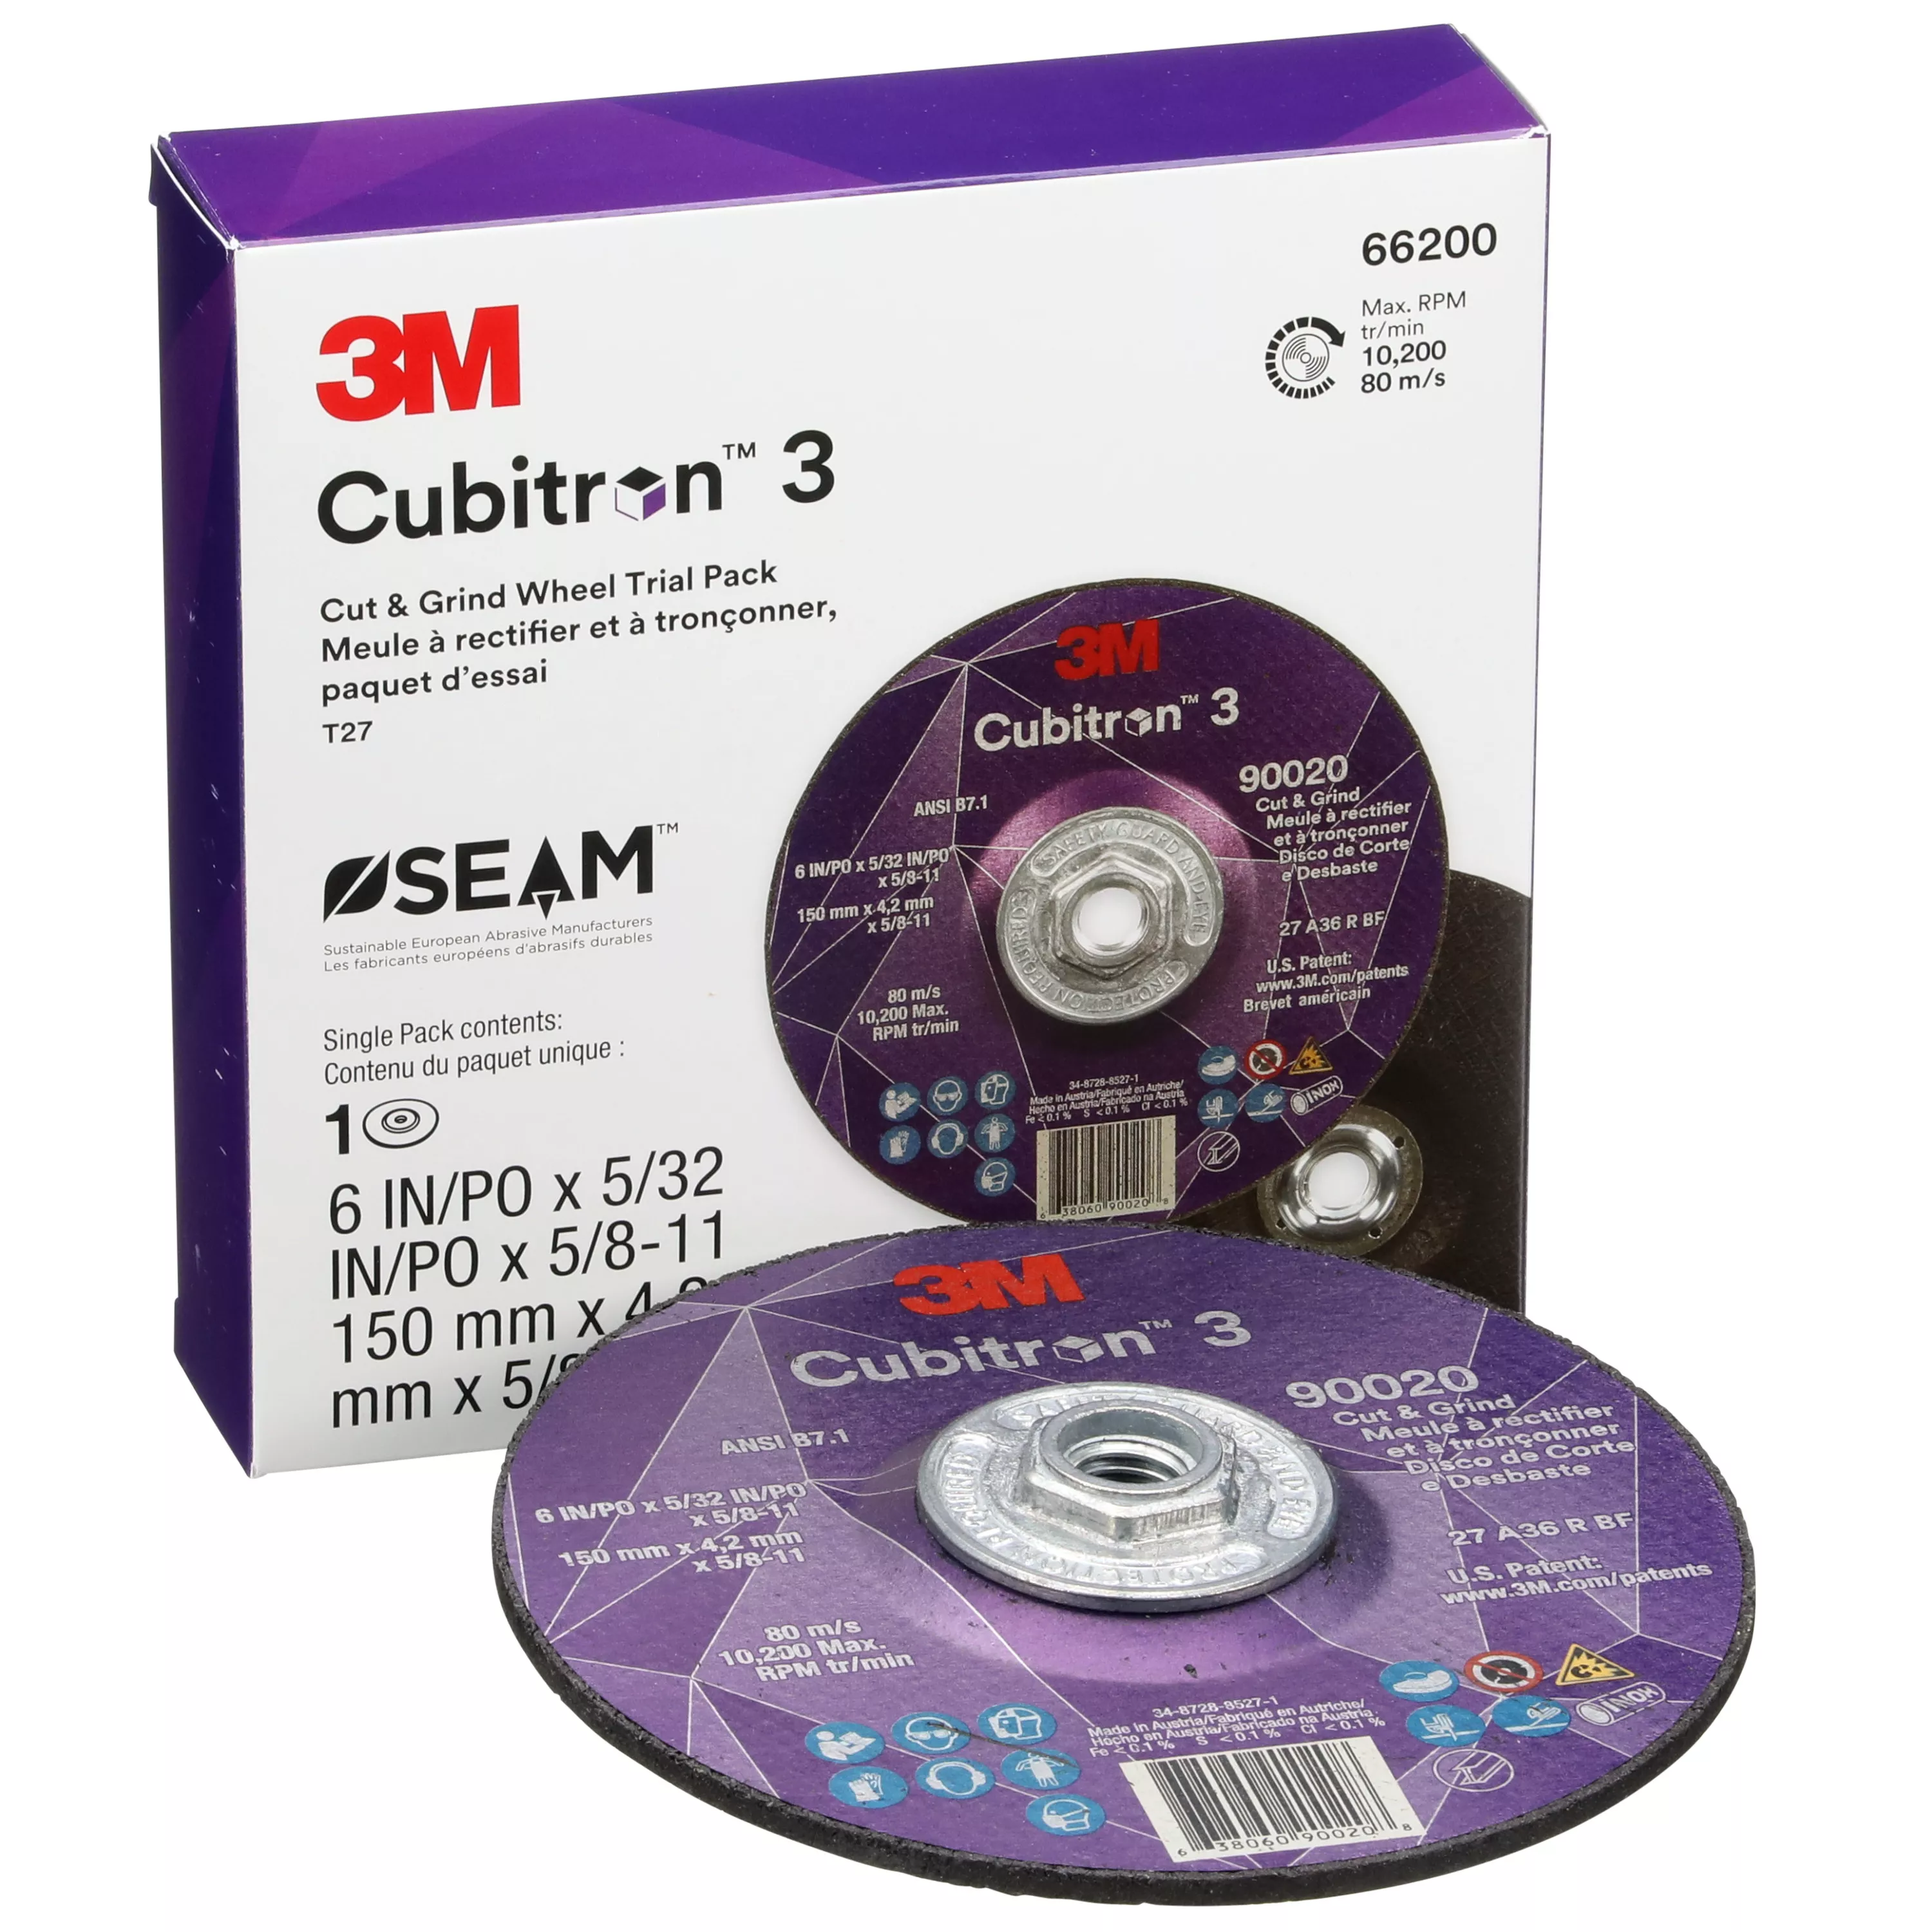 SKU 7100316747 | 3M™ Cubitron™ 3 Cut and Grind Wheel